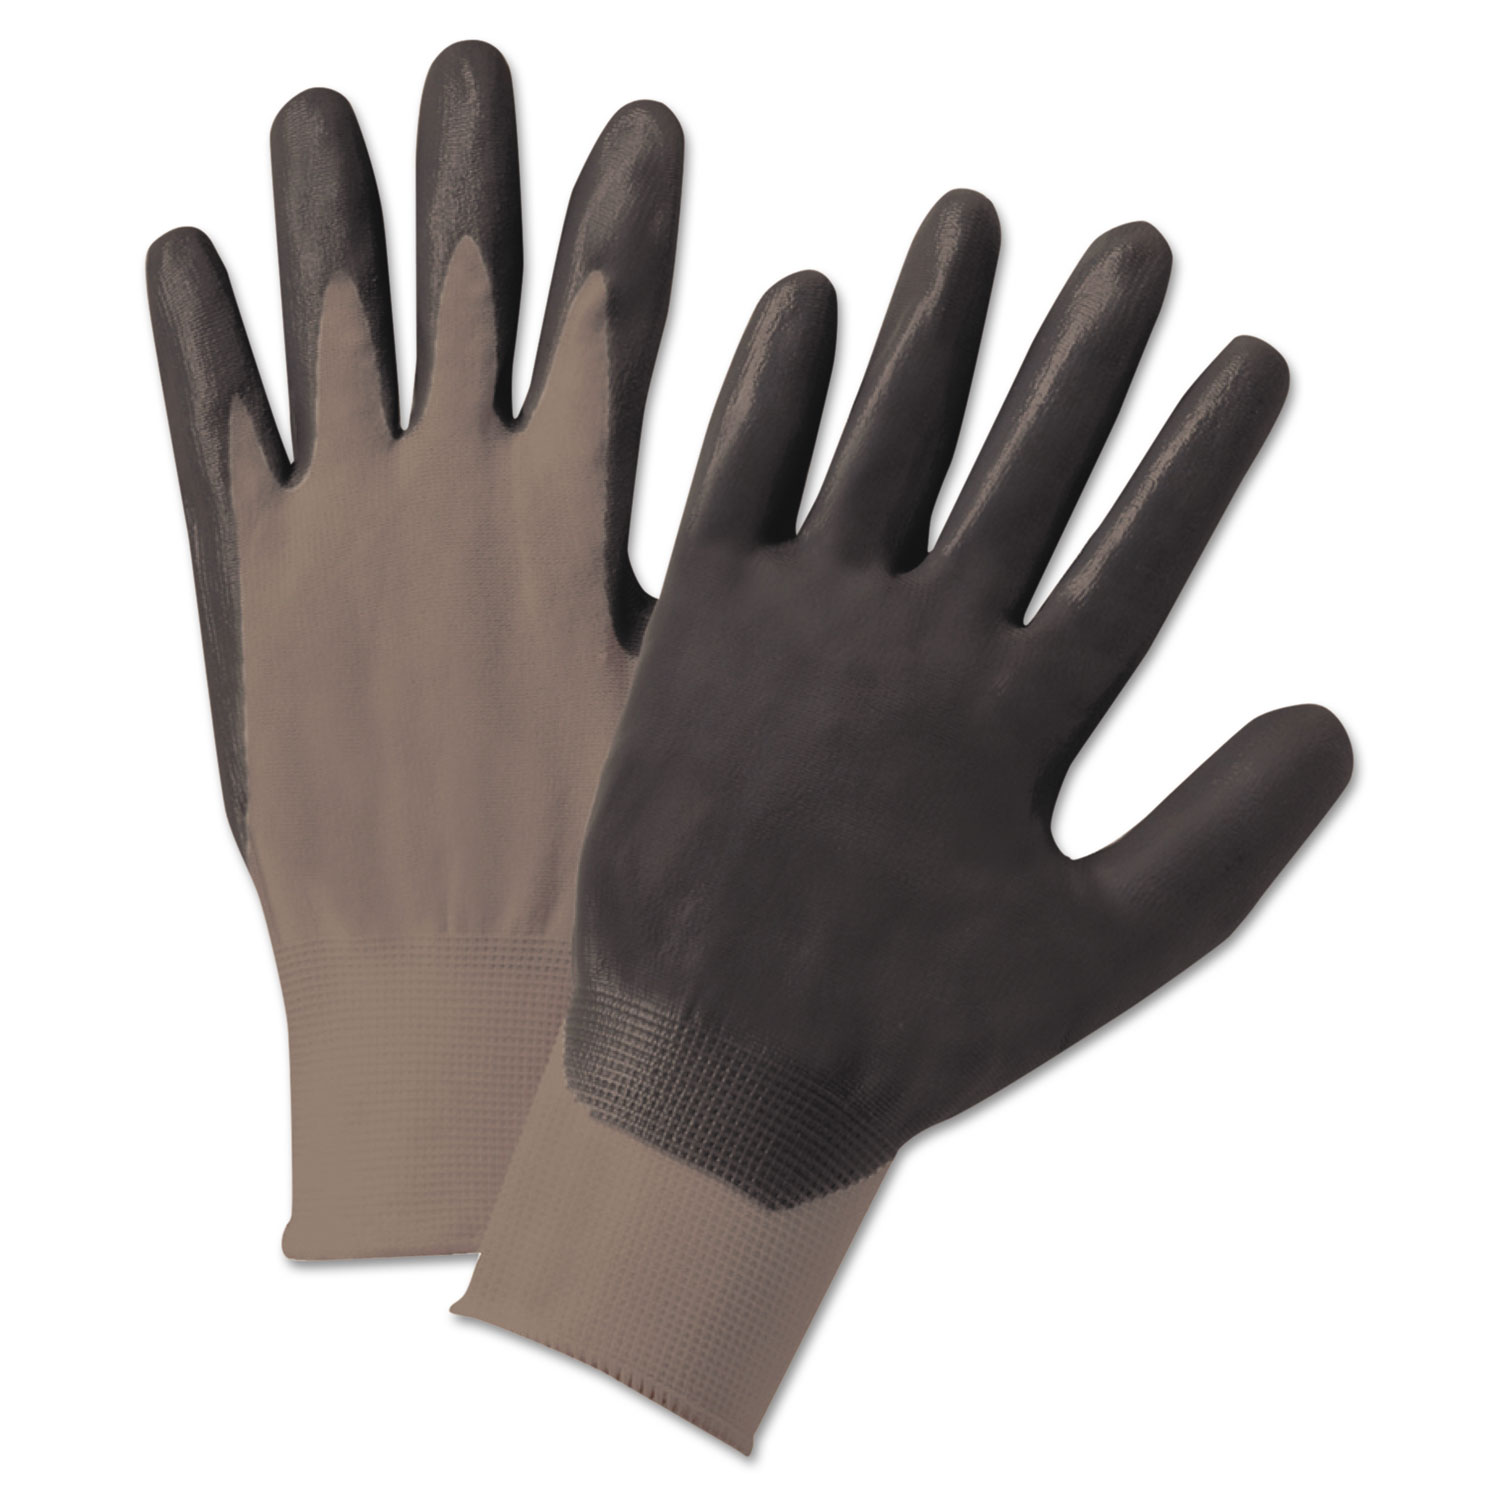  Anchor Brand 6020-M Nitrile-Coated Gloves, Gray/Black, Nylon Knit, Medium, 12 Pairs (ANR6020M) 